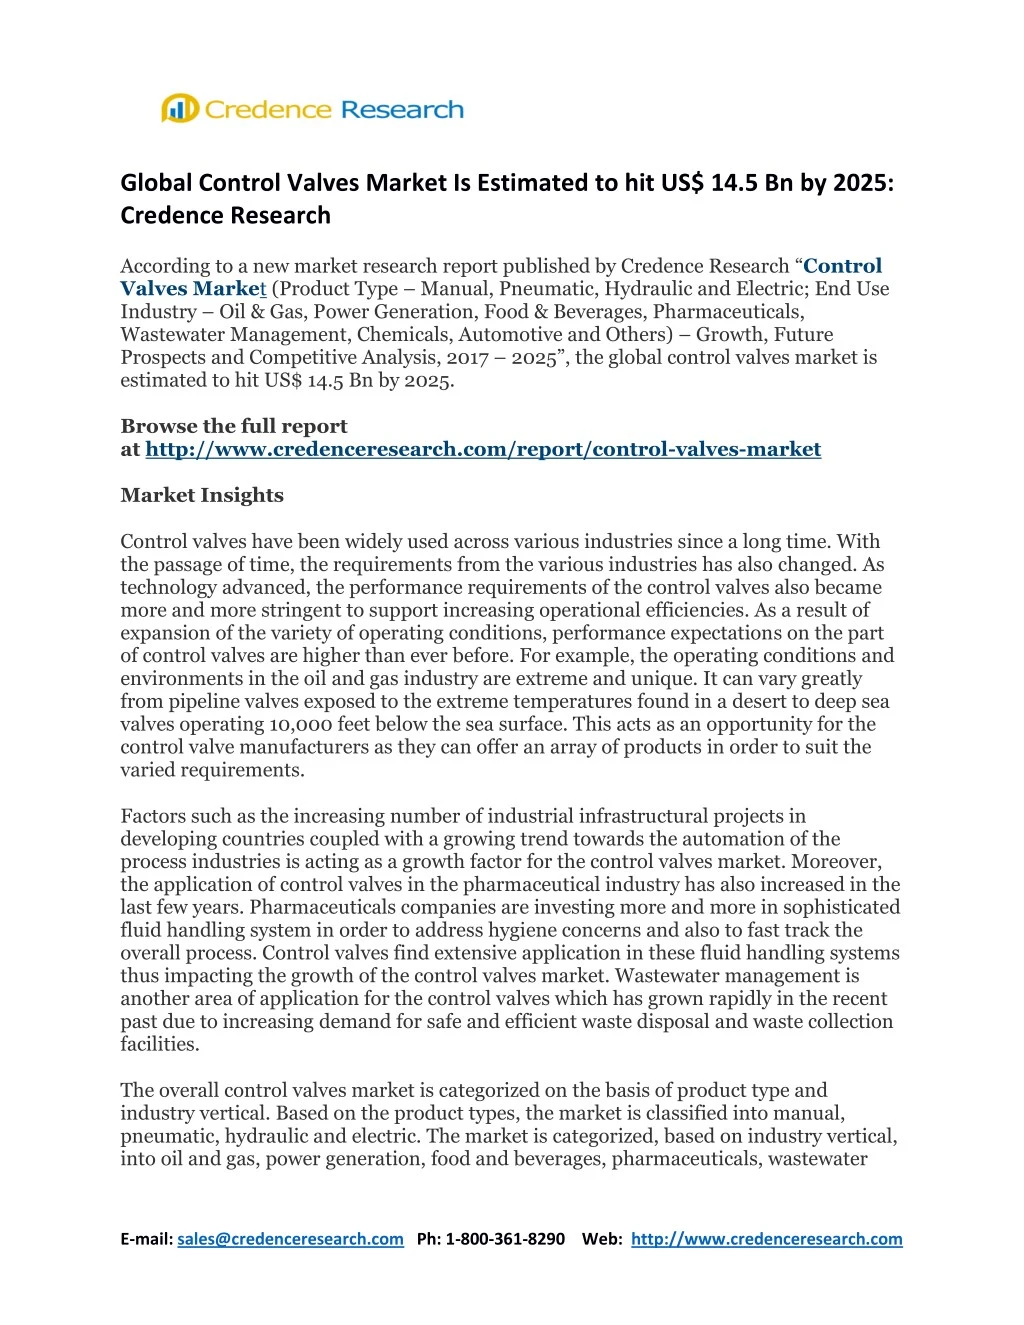 global control valves market is estimated